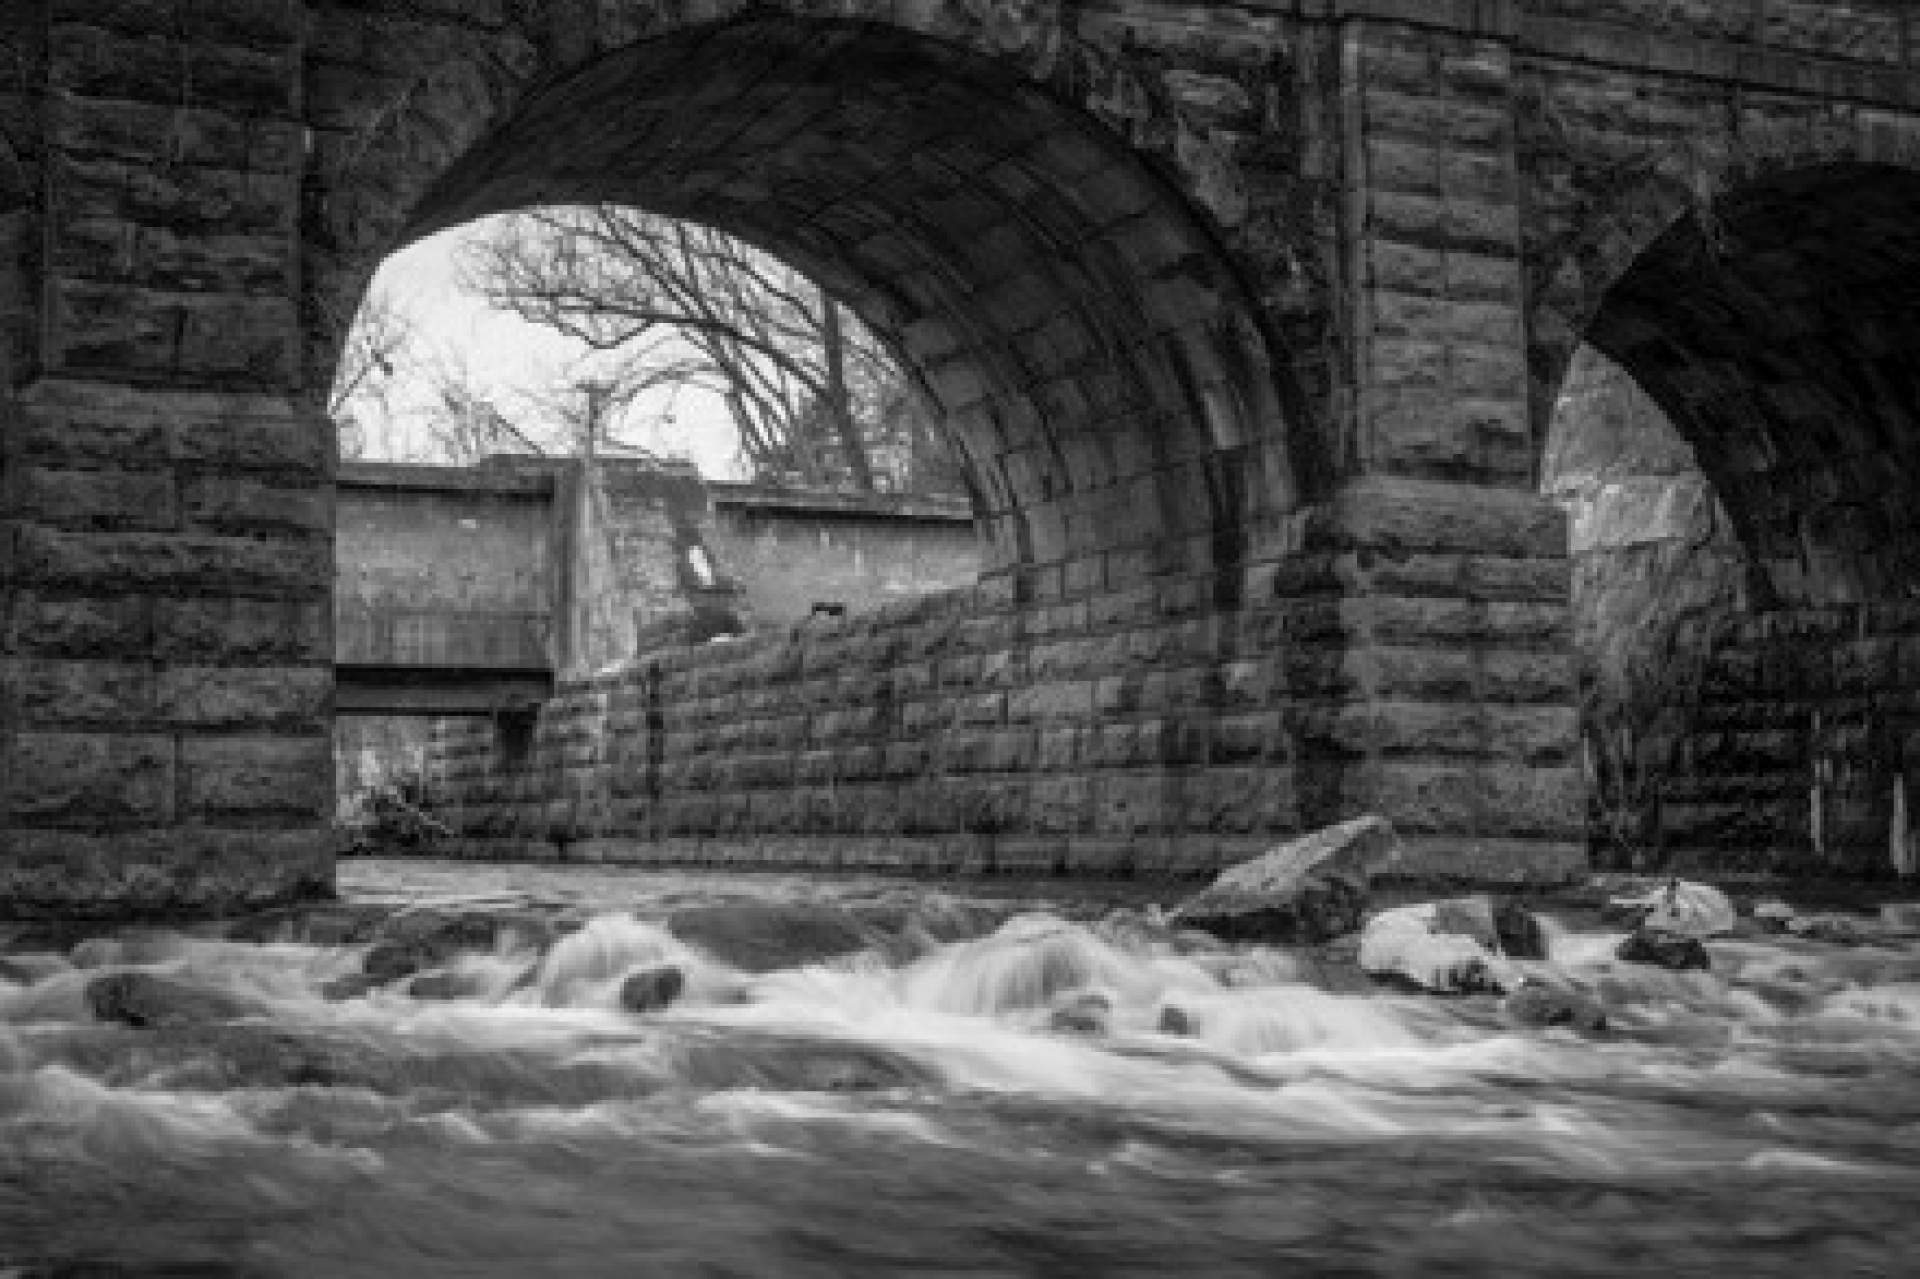 Butternut Creek Aqueduct, DeWitt, NY